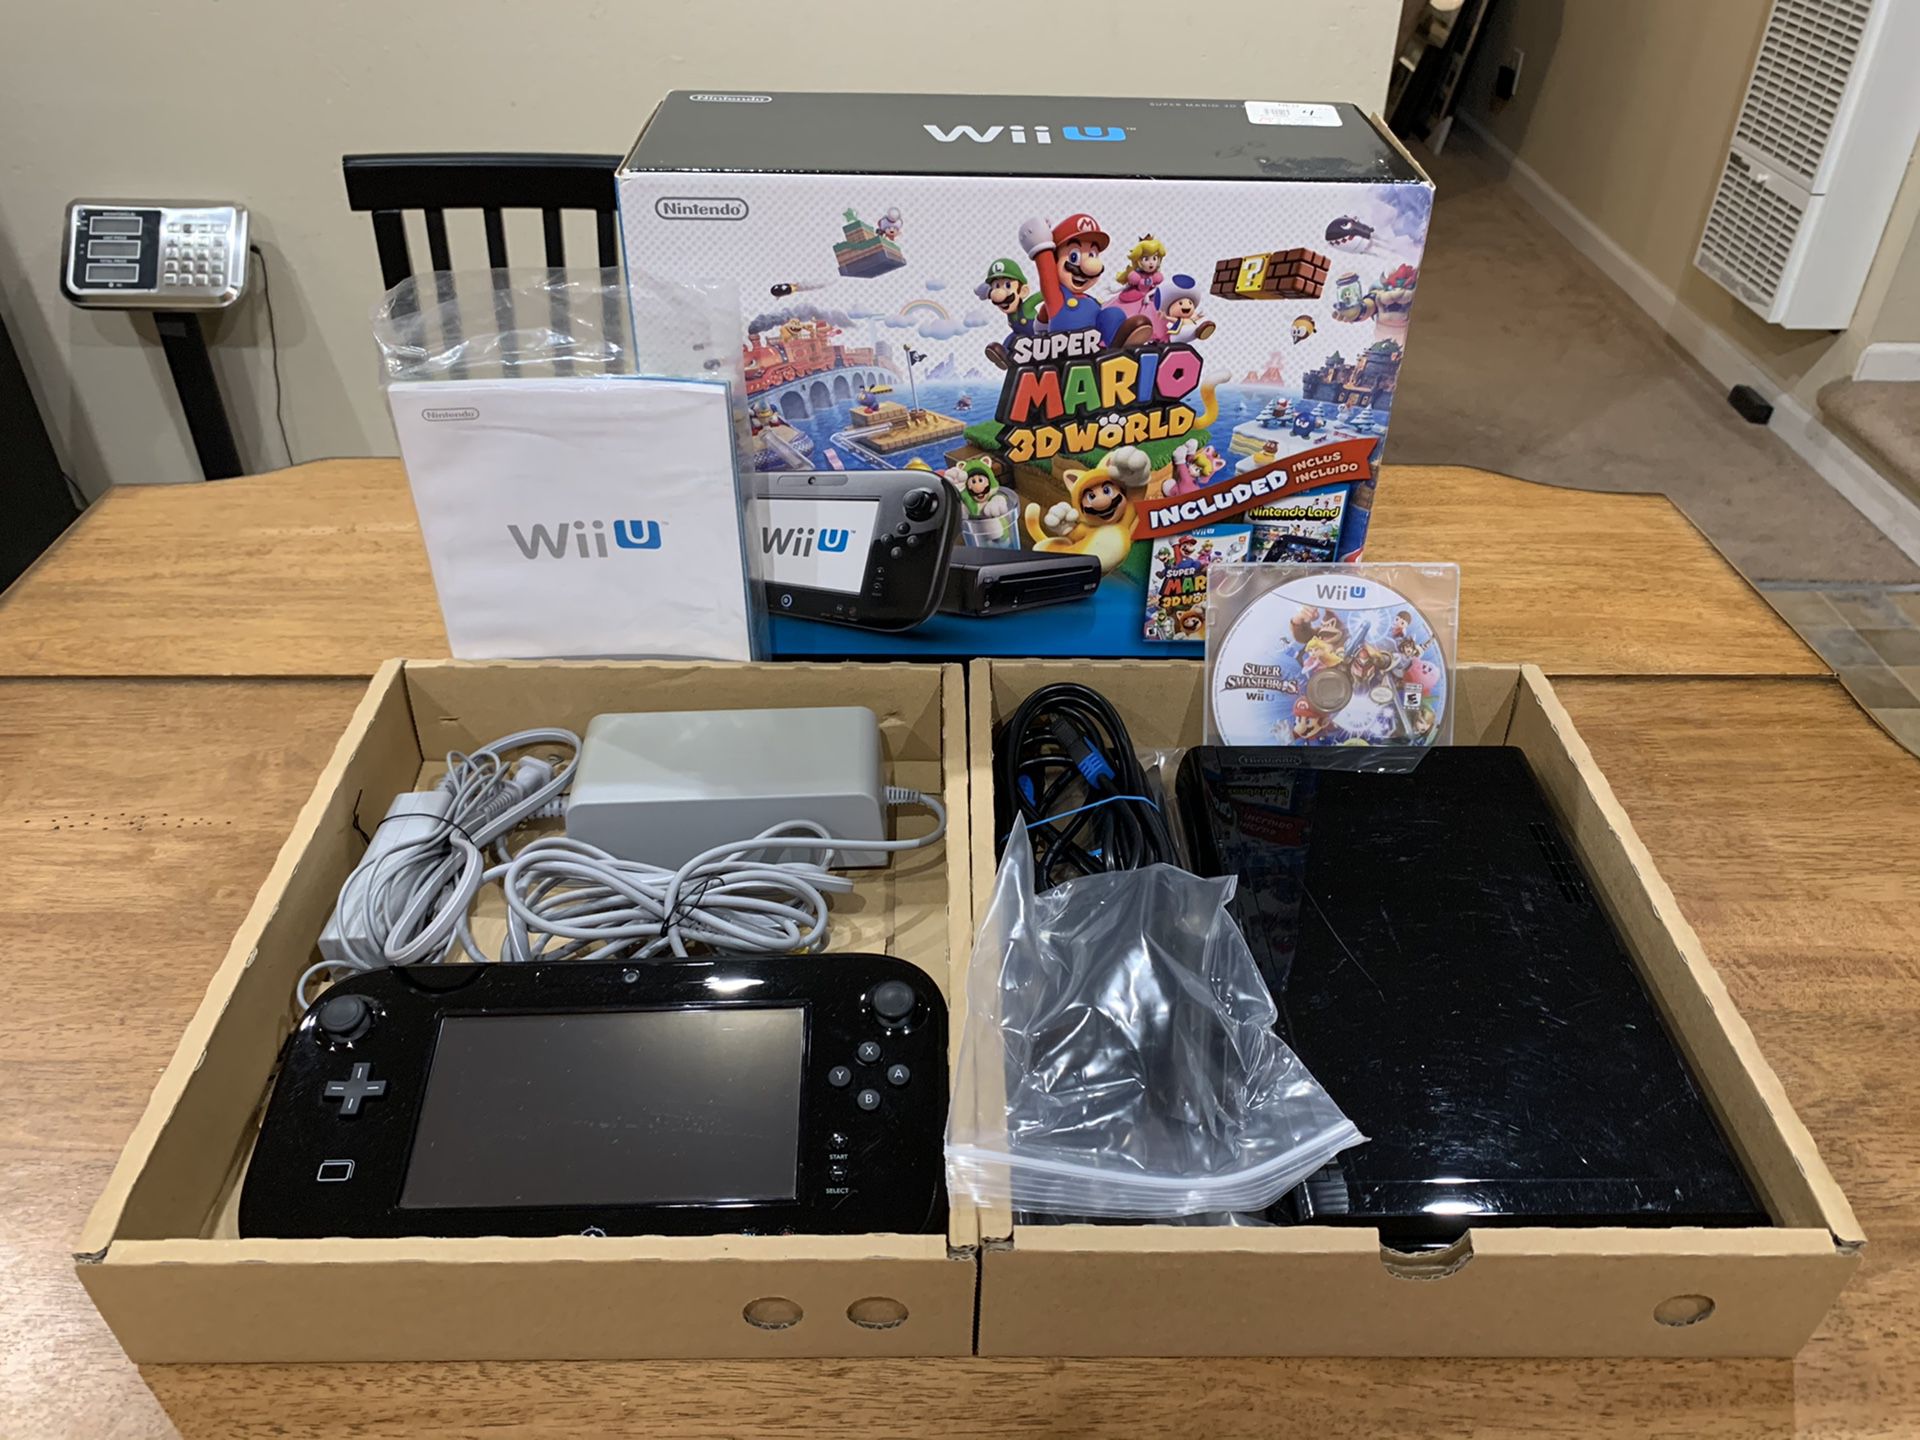 Nintendo Wii U WUP-101(02) 32GB Console w/ Accessories, Manual, Box, & Smash Bro